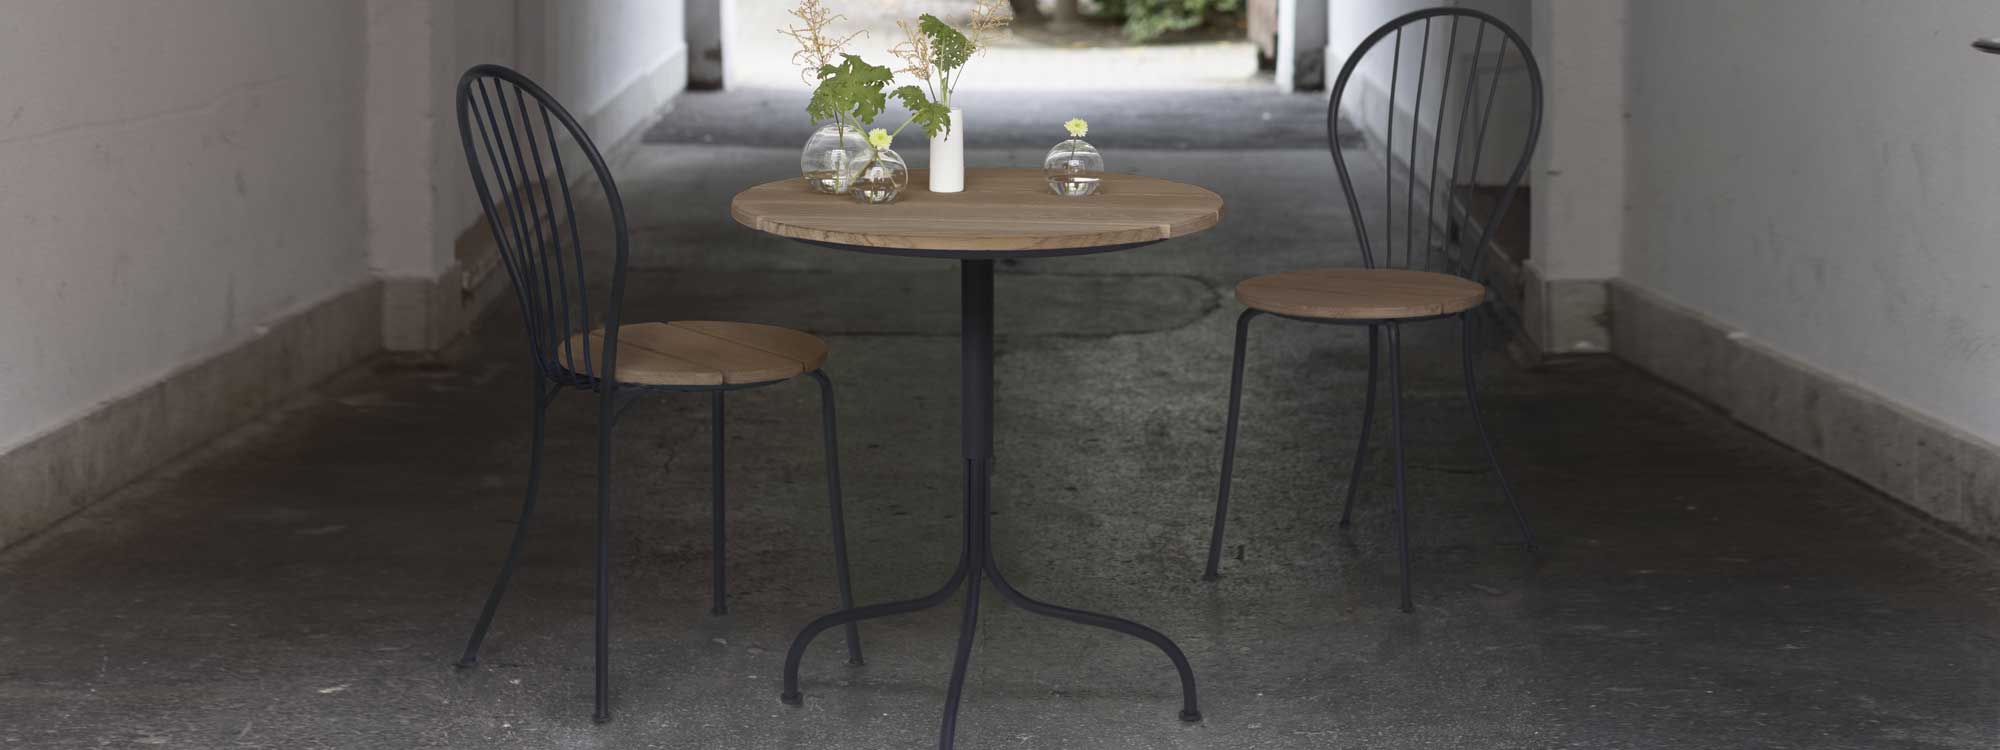 Image of pair of Akleja chairs either side of Akleja table in dark-grey steel and teak by Grythyttan Stålmöbler, shown in outdoor passageway